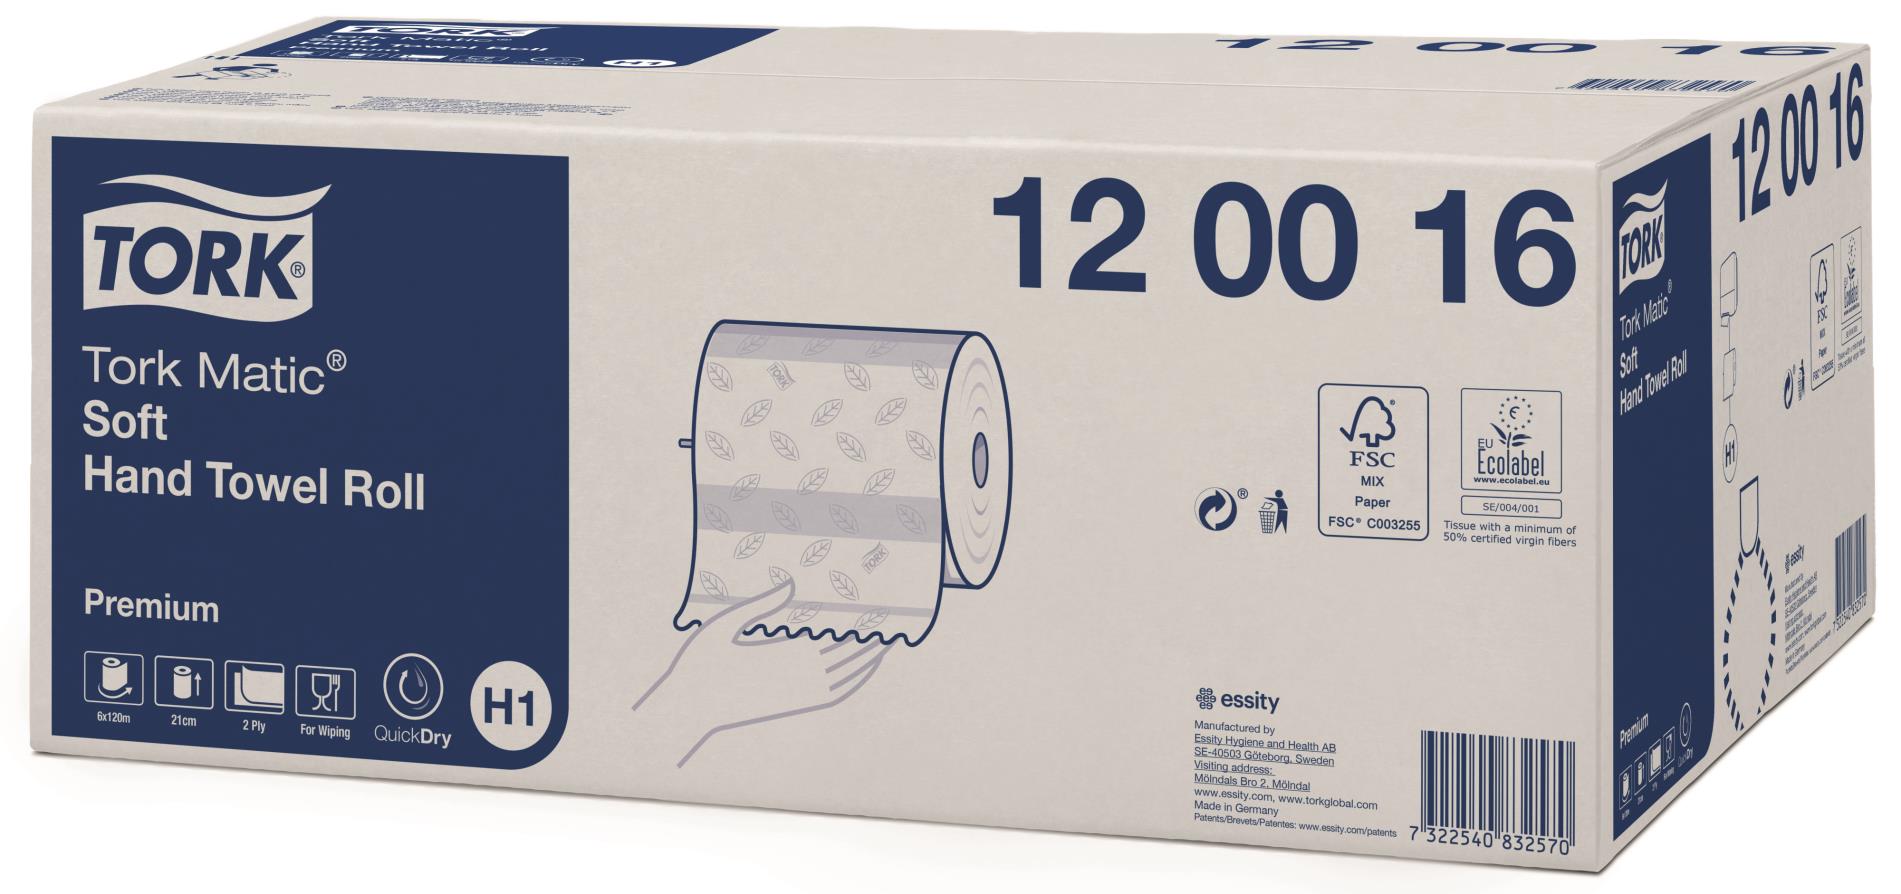 Papírové ručníky v roli Tork Matic® Soft Premium